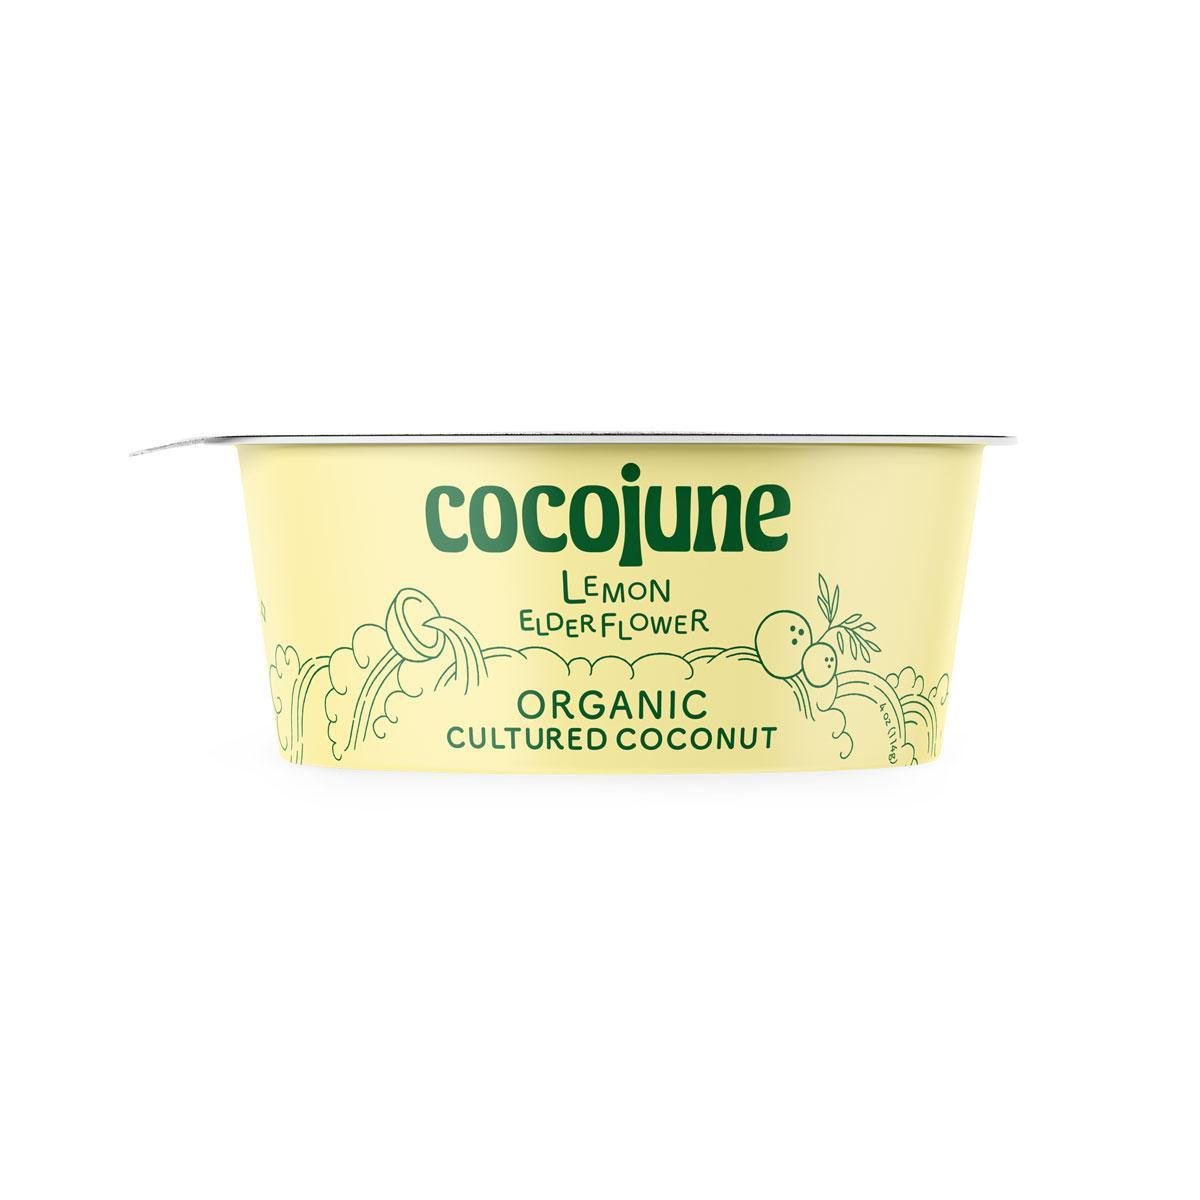 cocojune - 'Lemon Elderflower' Organic Cultured Coconut (4OZ) - The Epicurean Trader